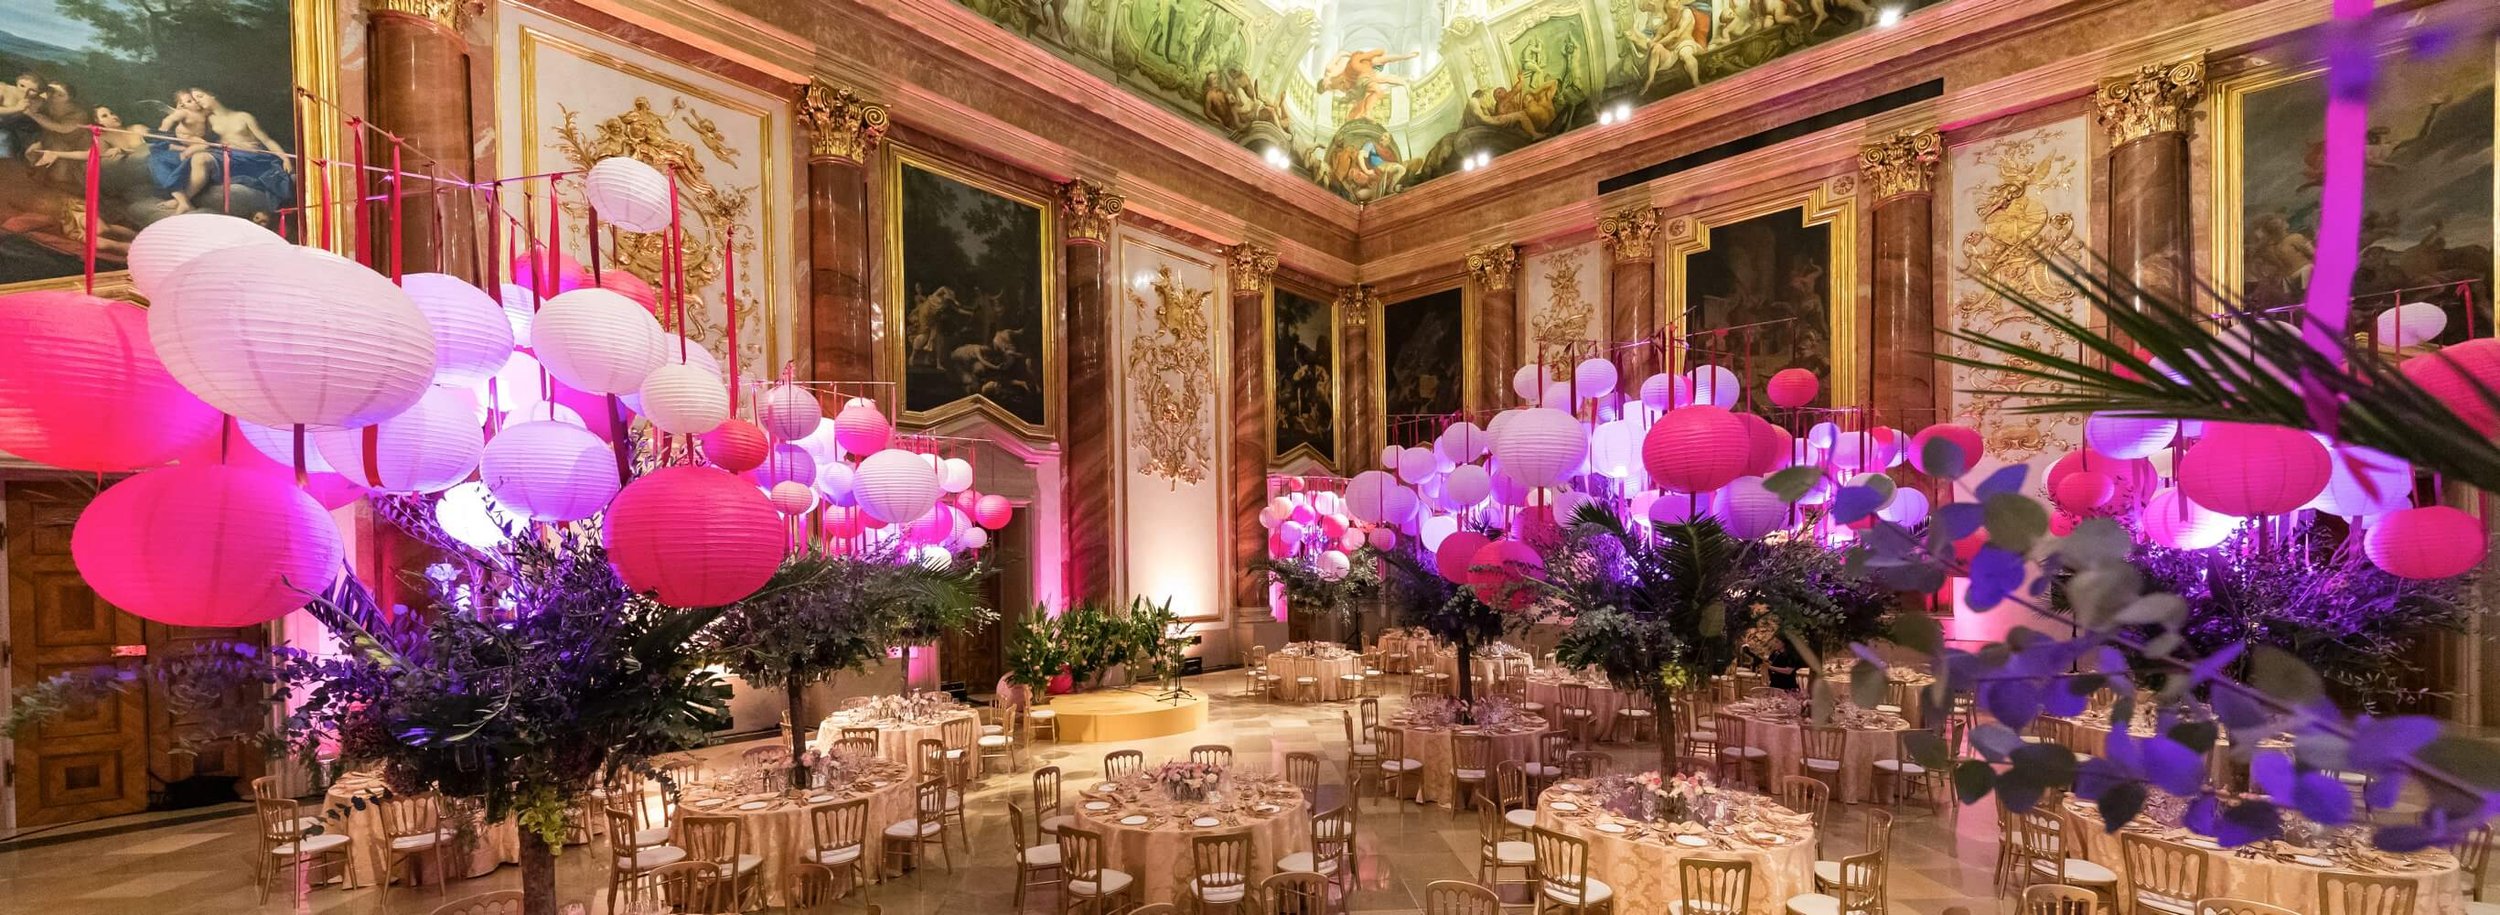 Wedding at Palais Liechtenstein, table setting before the guests enter.